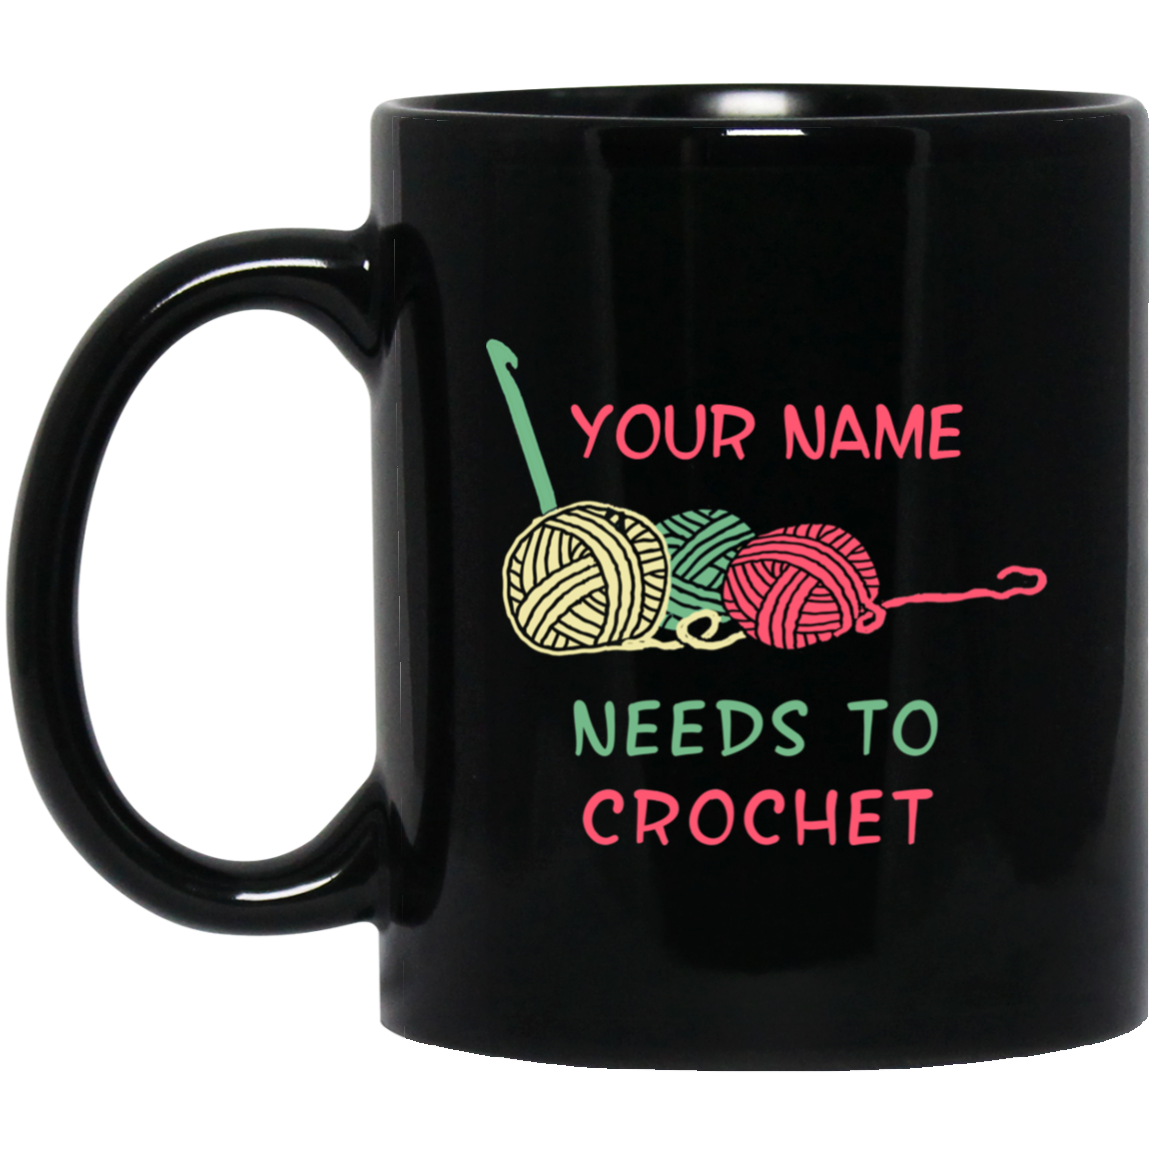 Needs to Crochet - Personalized Black Mugs